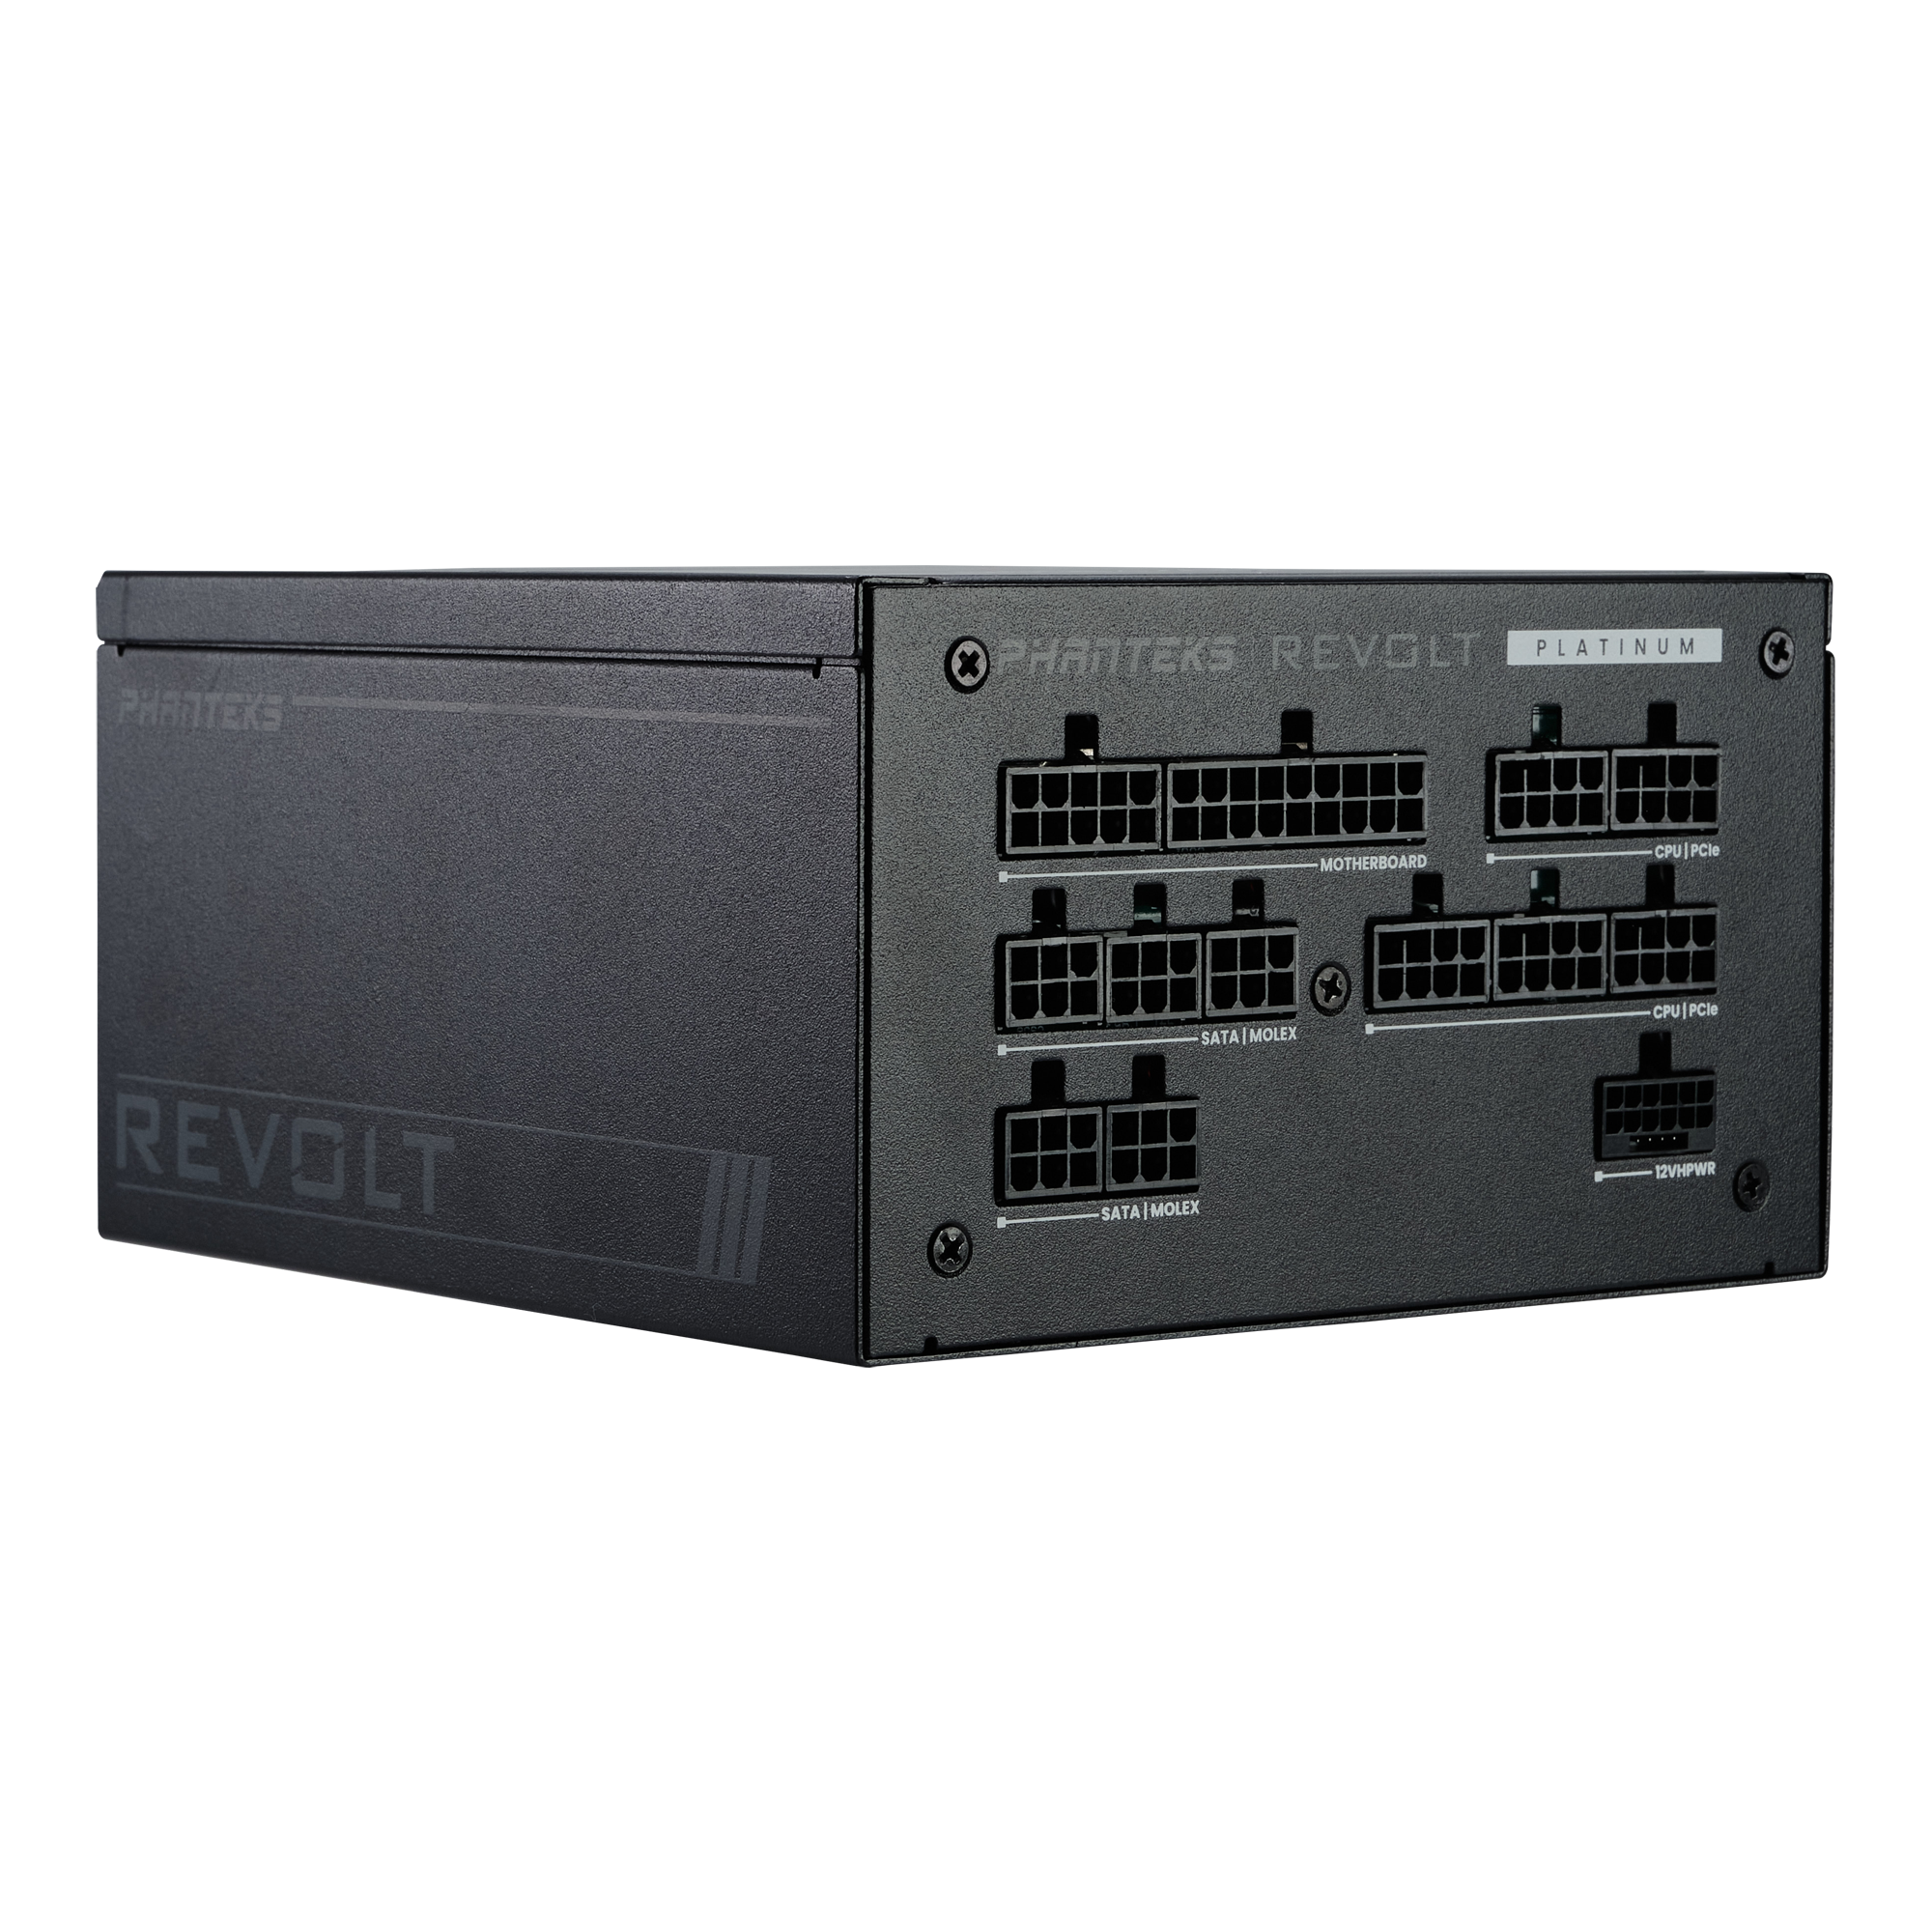 Phanteks - Phanteks Revolt Cableless 1200W ATX 3.0 PCIe 5.0 Modular 80 Plus Platinum Power Supply - Black